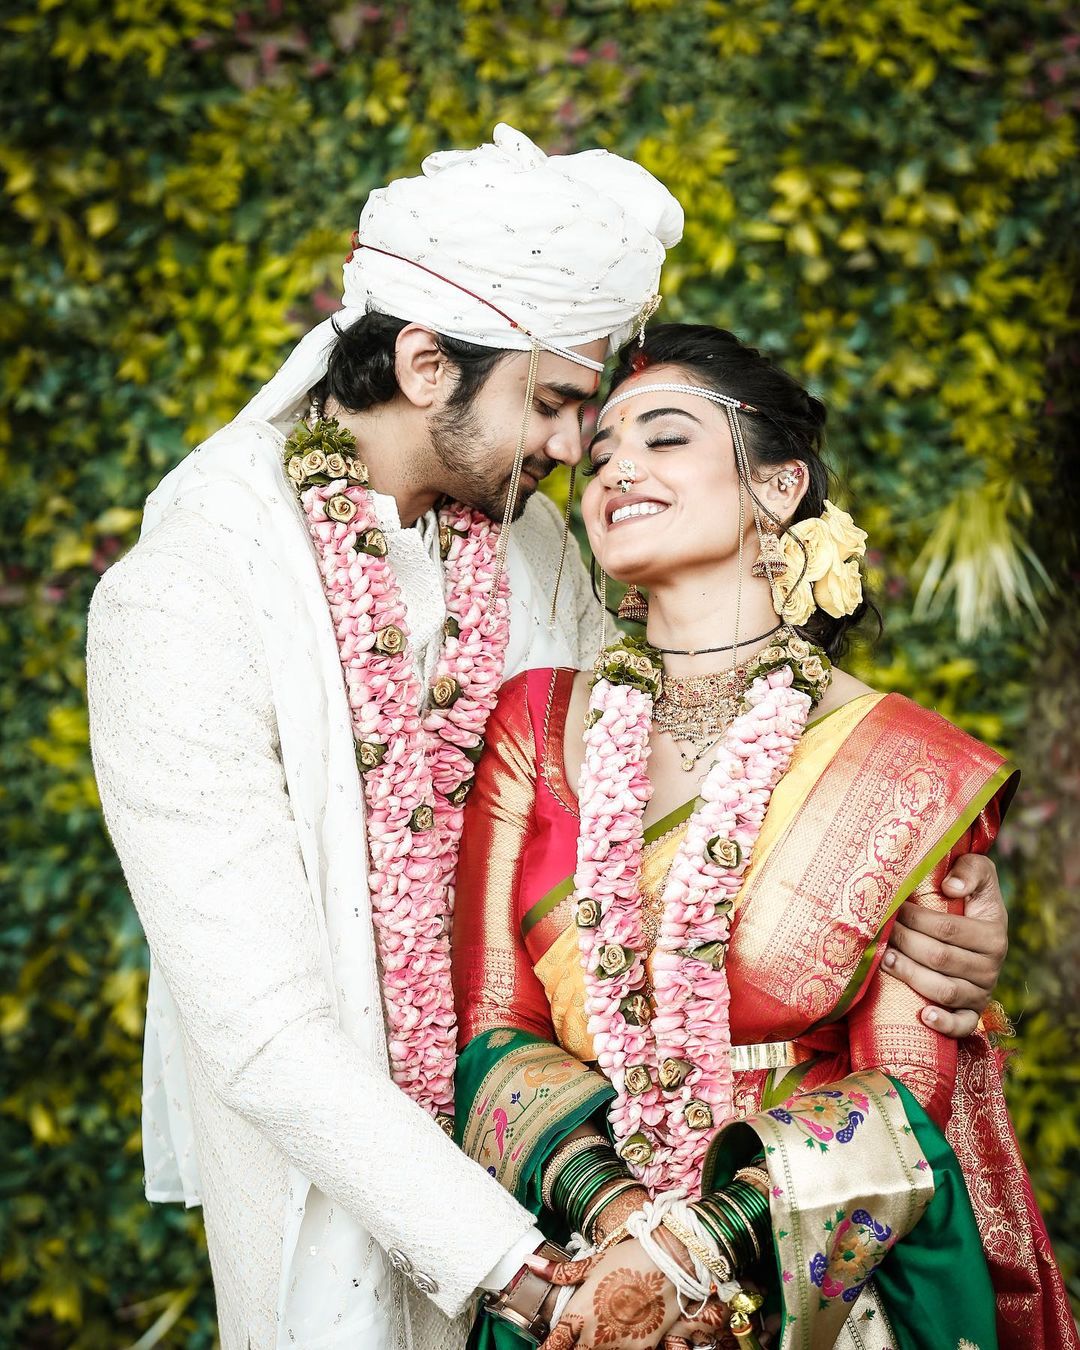 Hruta Durgule Prateek Shah Honeymoon